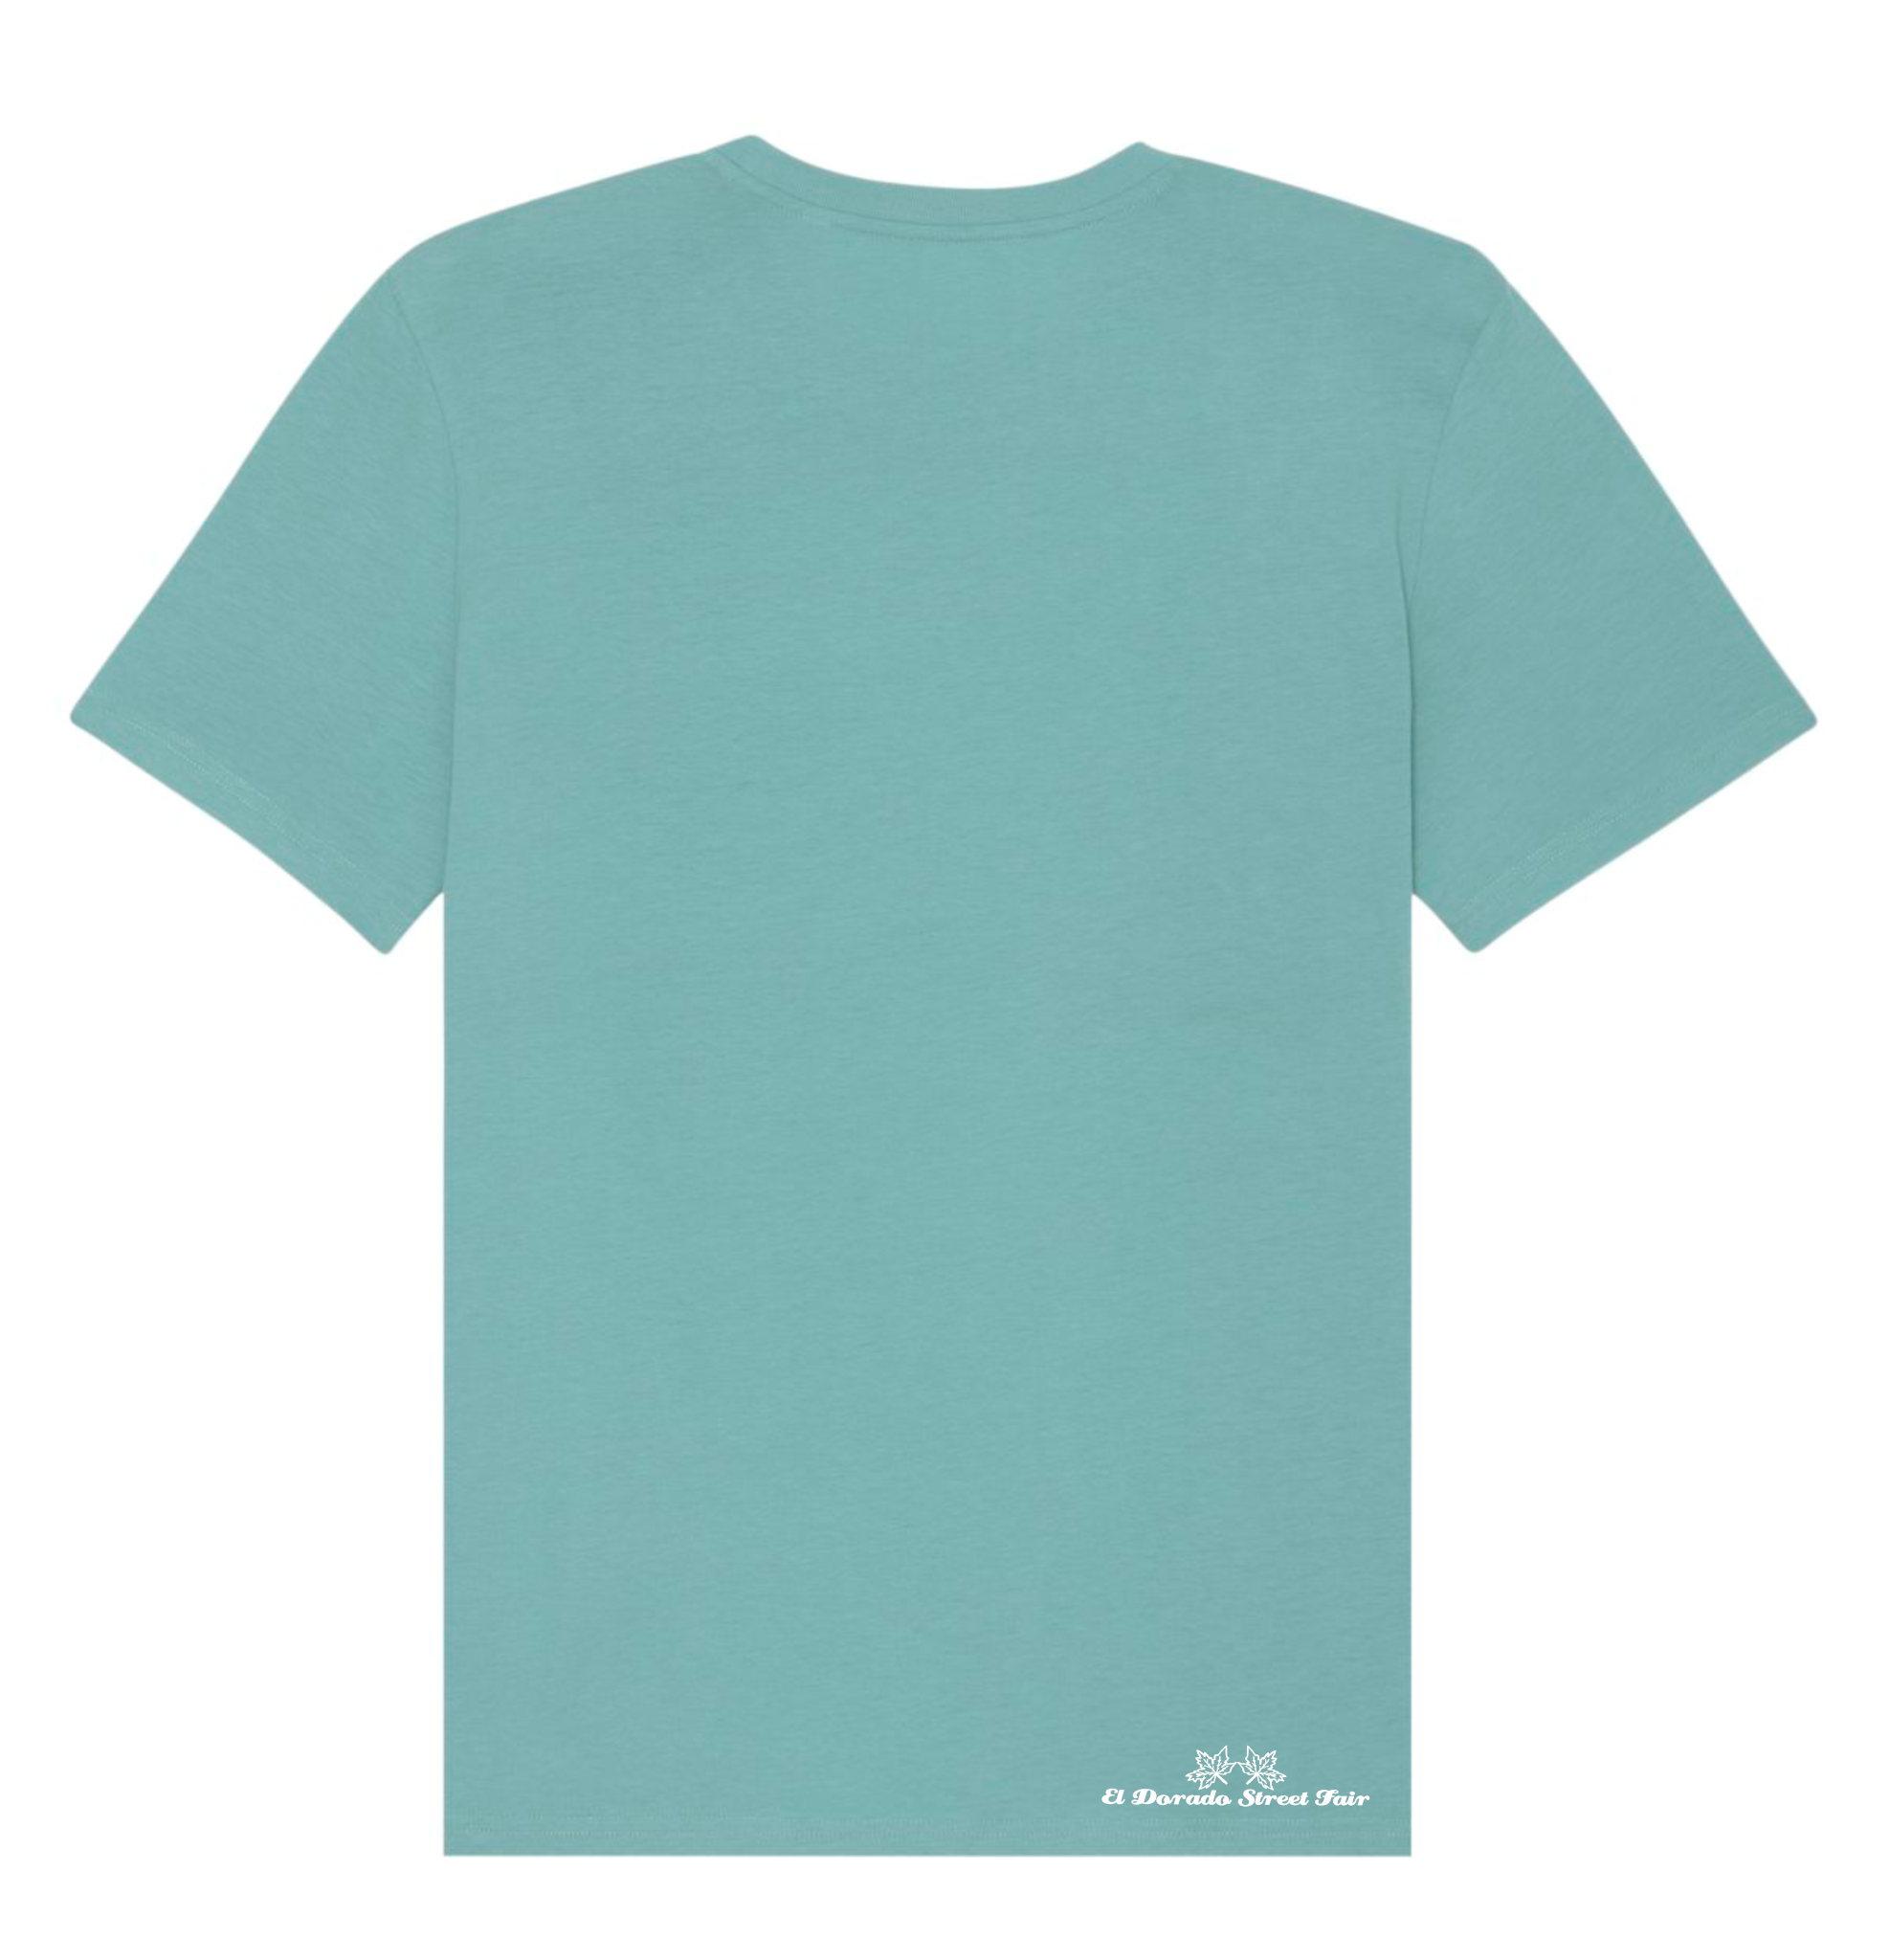 Basic Bio Herren/Unisex T-Shirt - Grünton